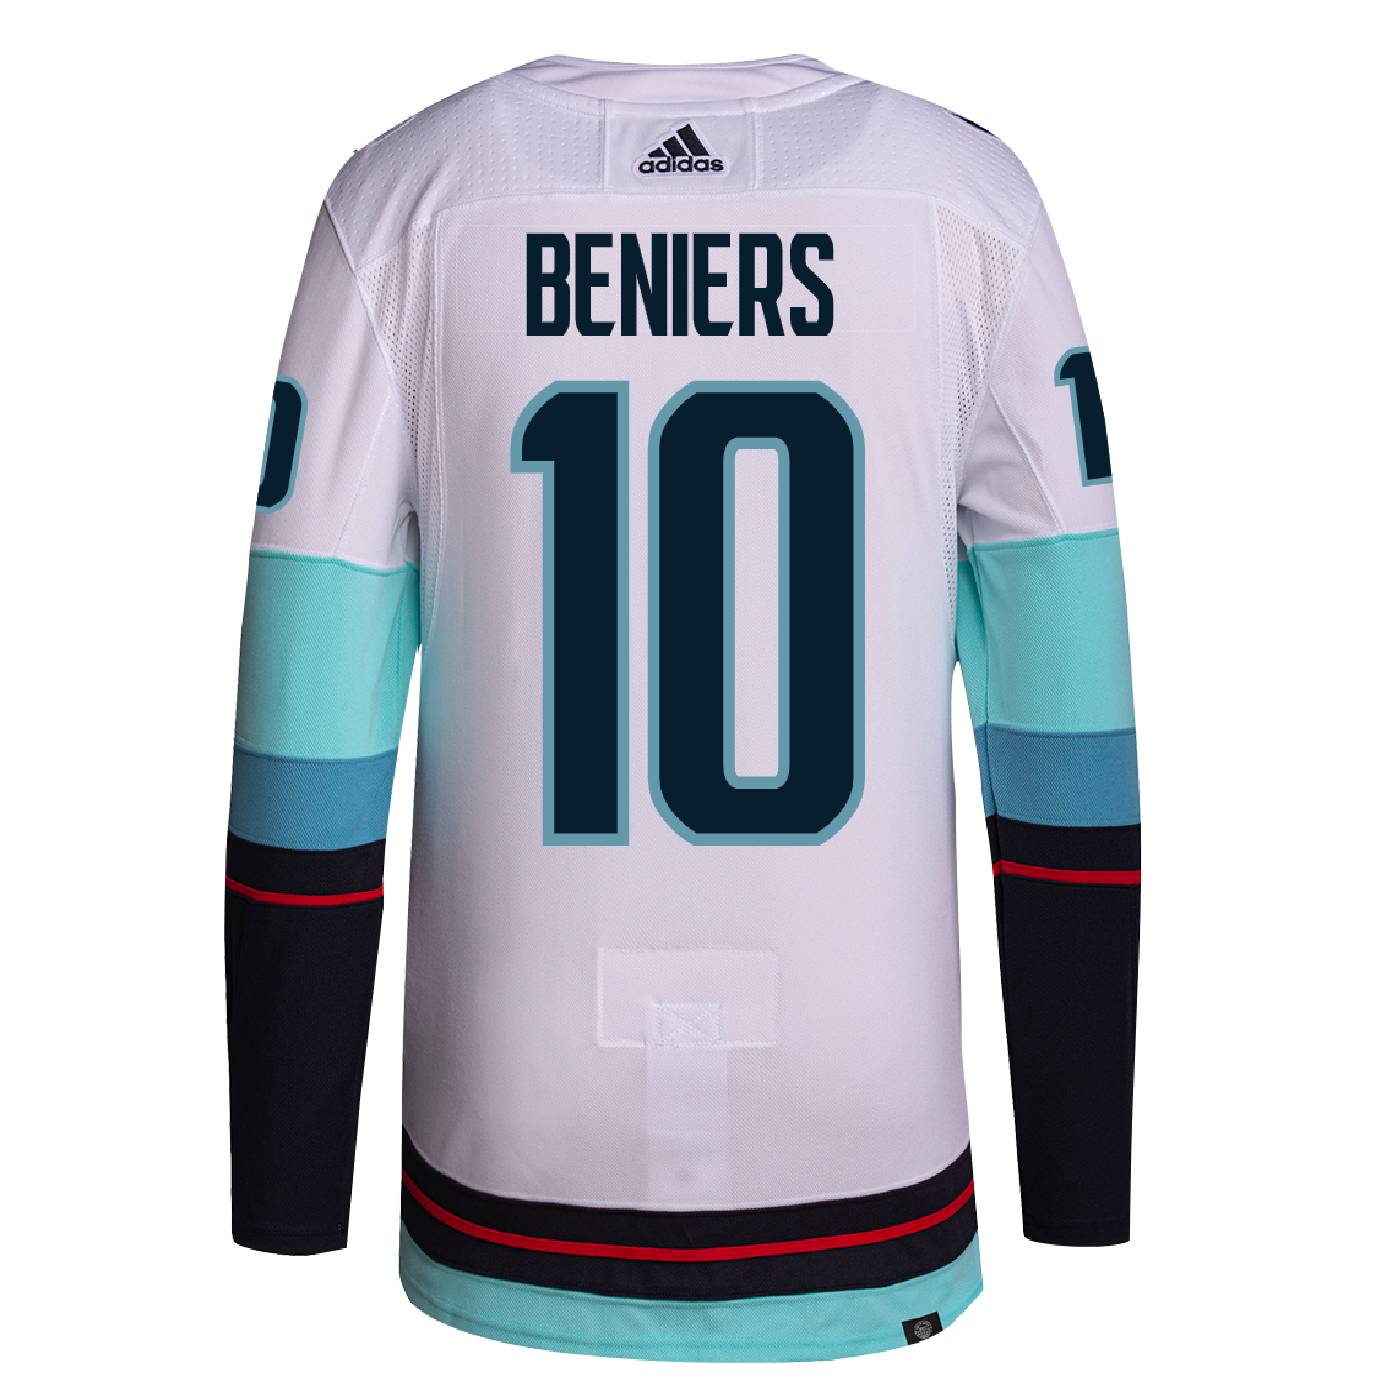 Matty Beniers All Star Jersey avail on team store online! : r